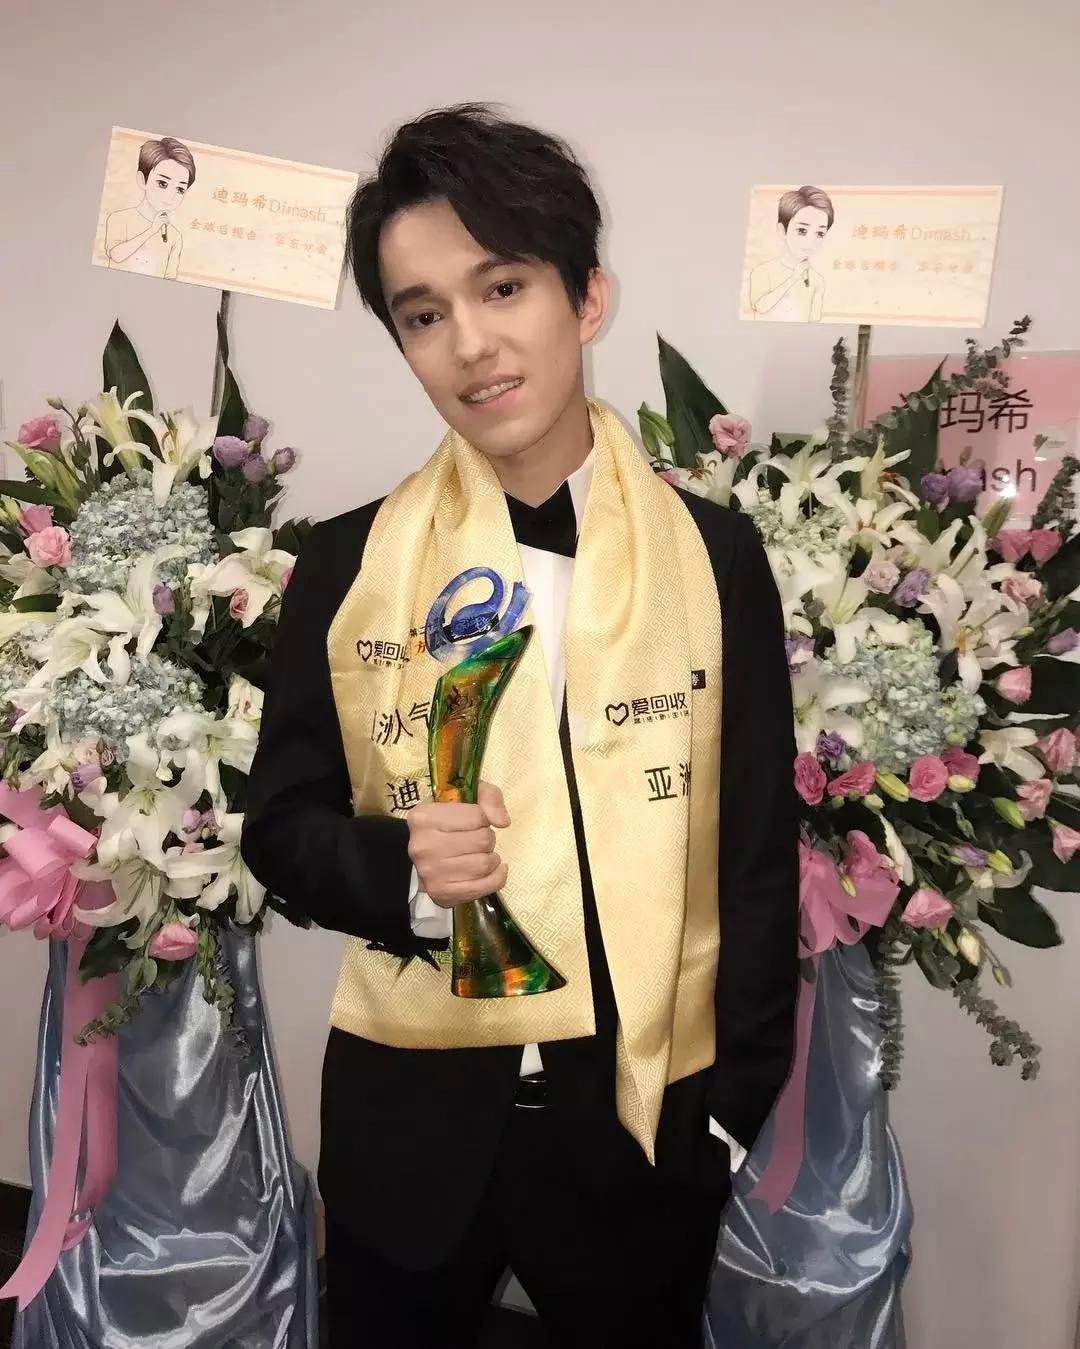 Best Girlfriend Award Trophy Lovely Dimash Kudaibergen Wins Best asian Singer In China’s top